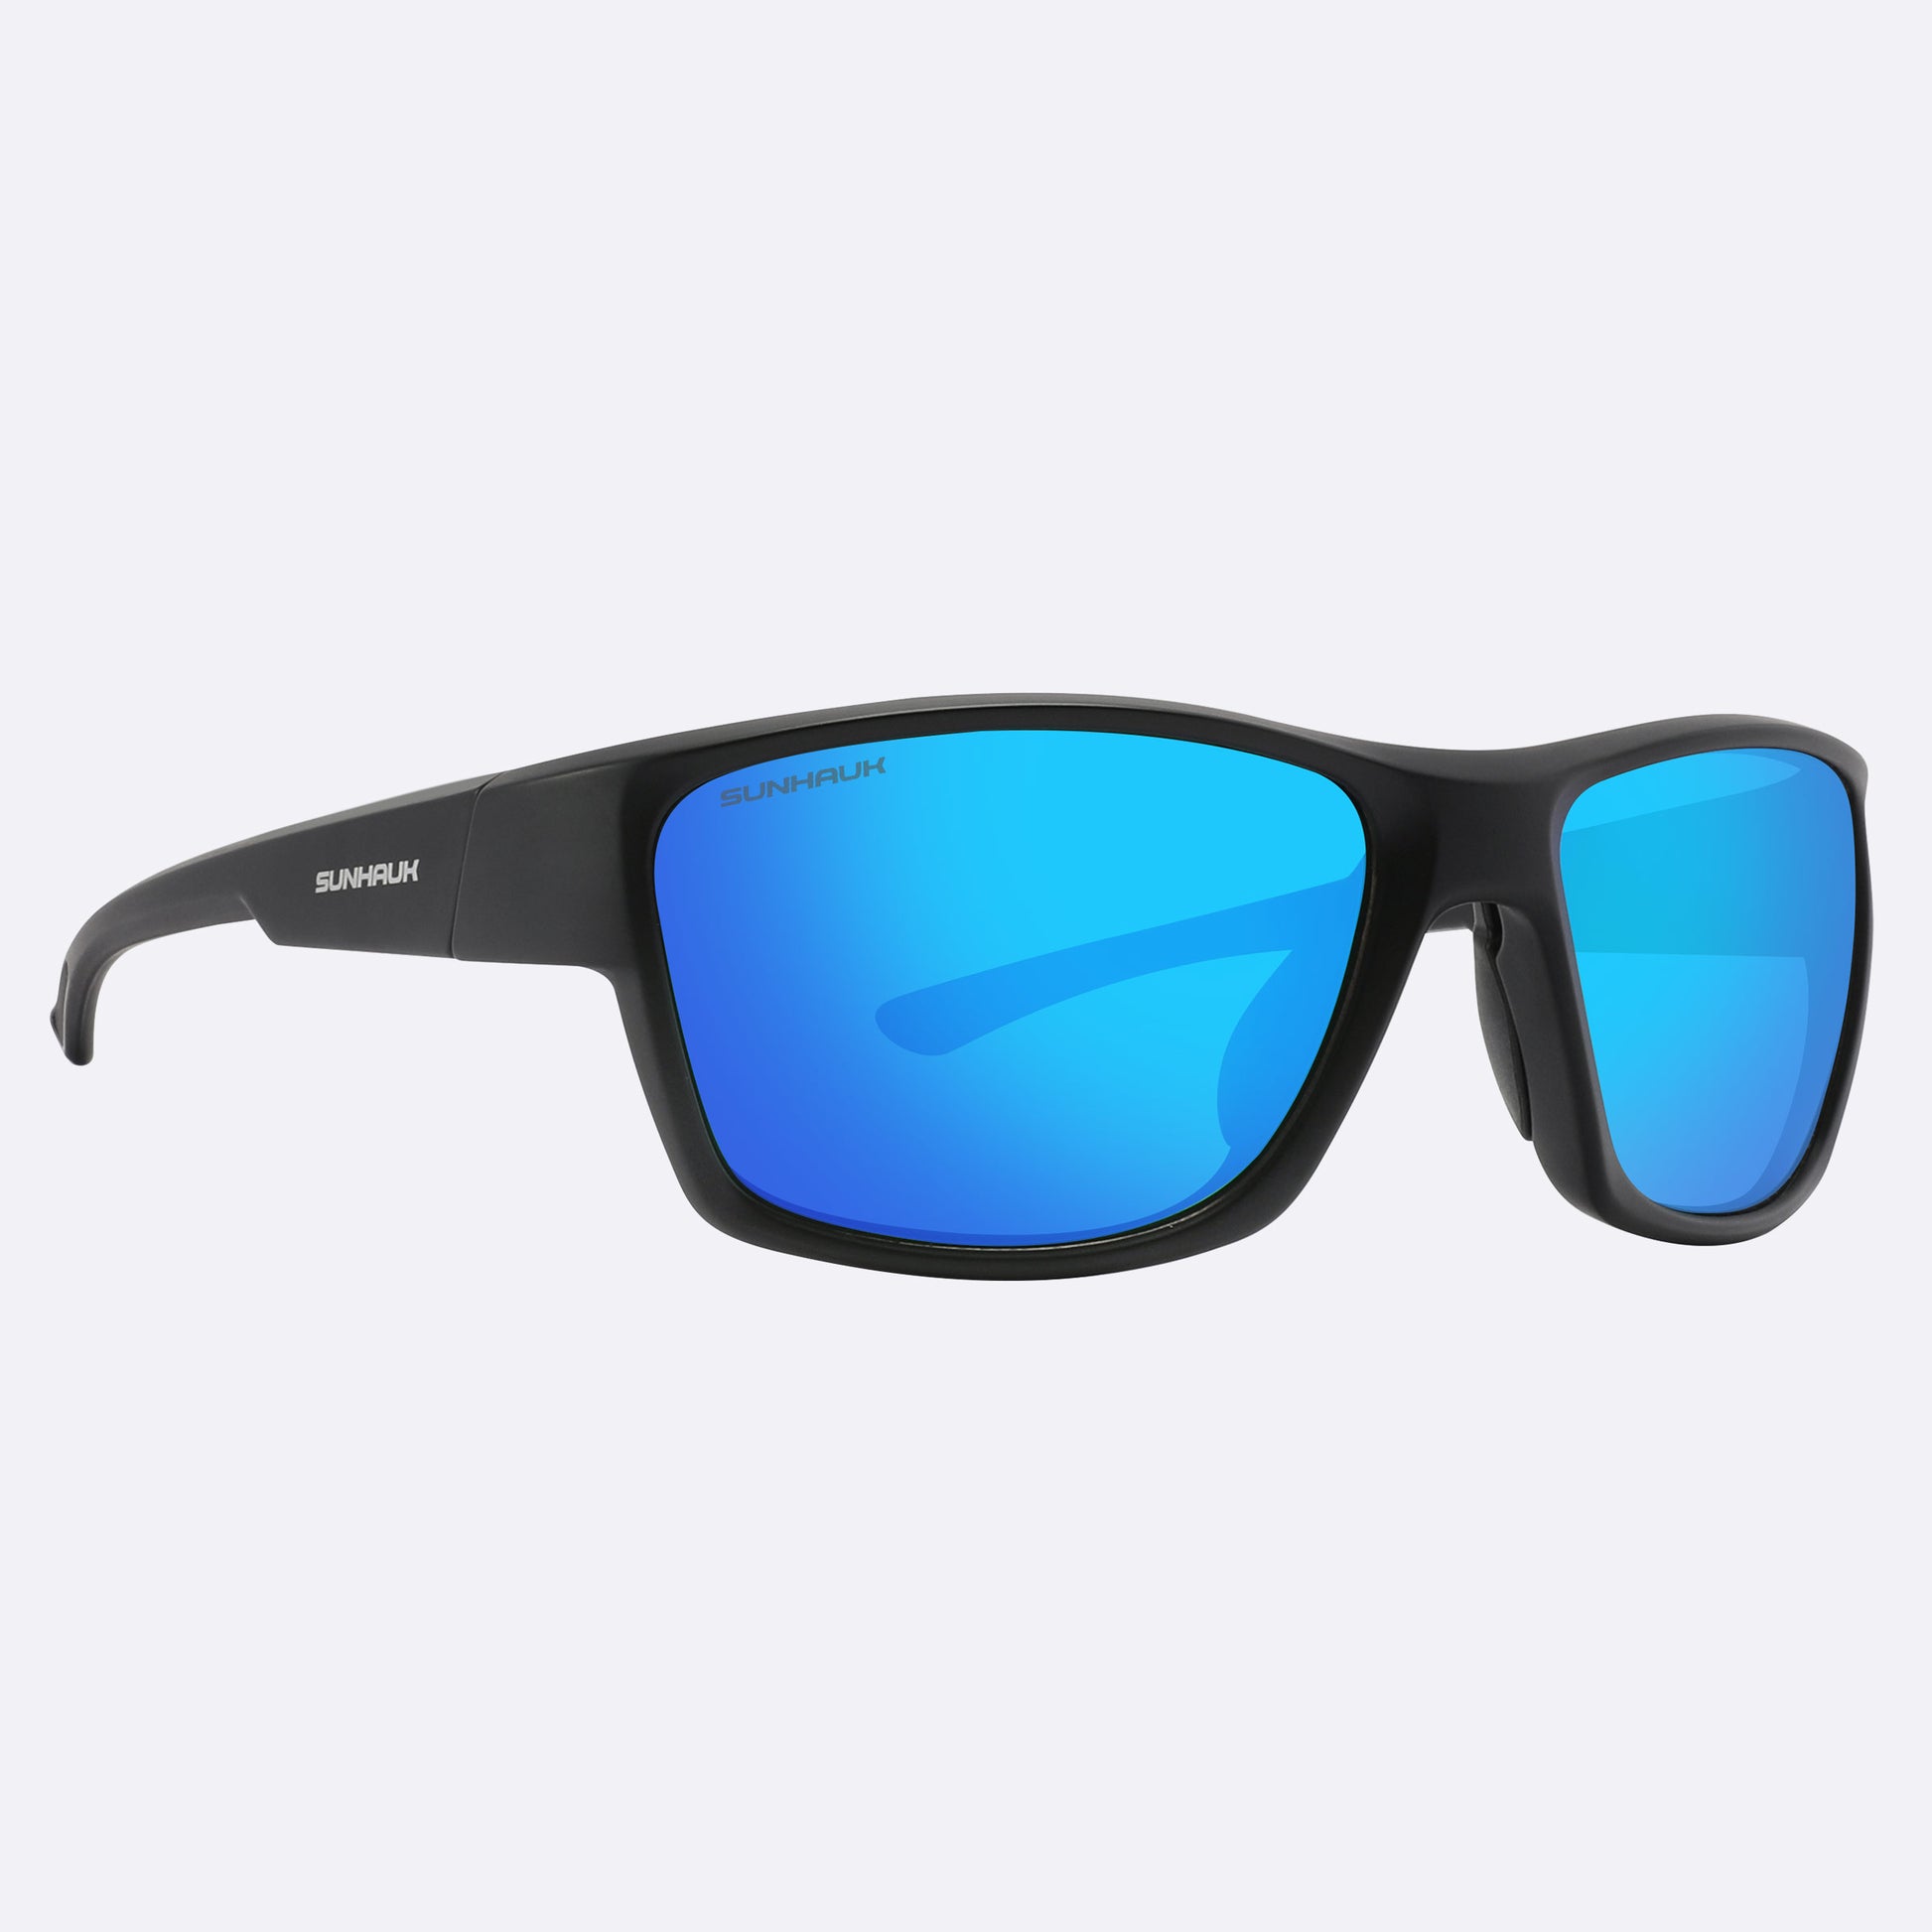 Elusive Sapphire - Polarized Sunglasses For Fishing | SUNHAUK